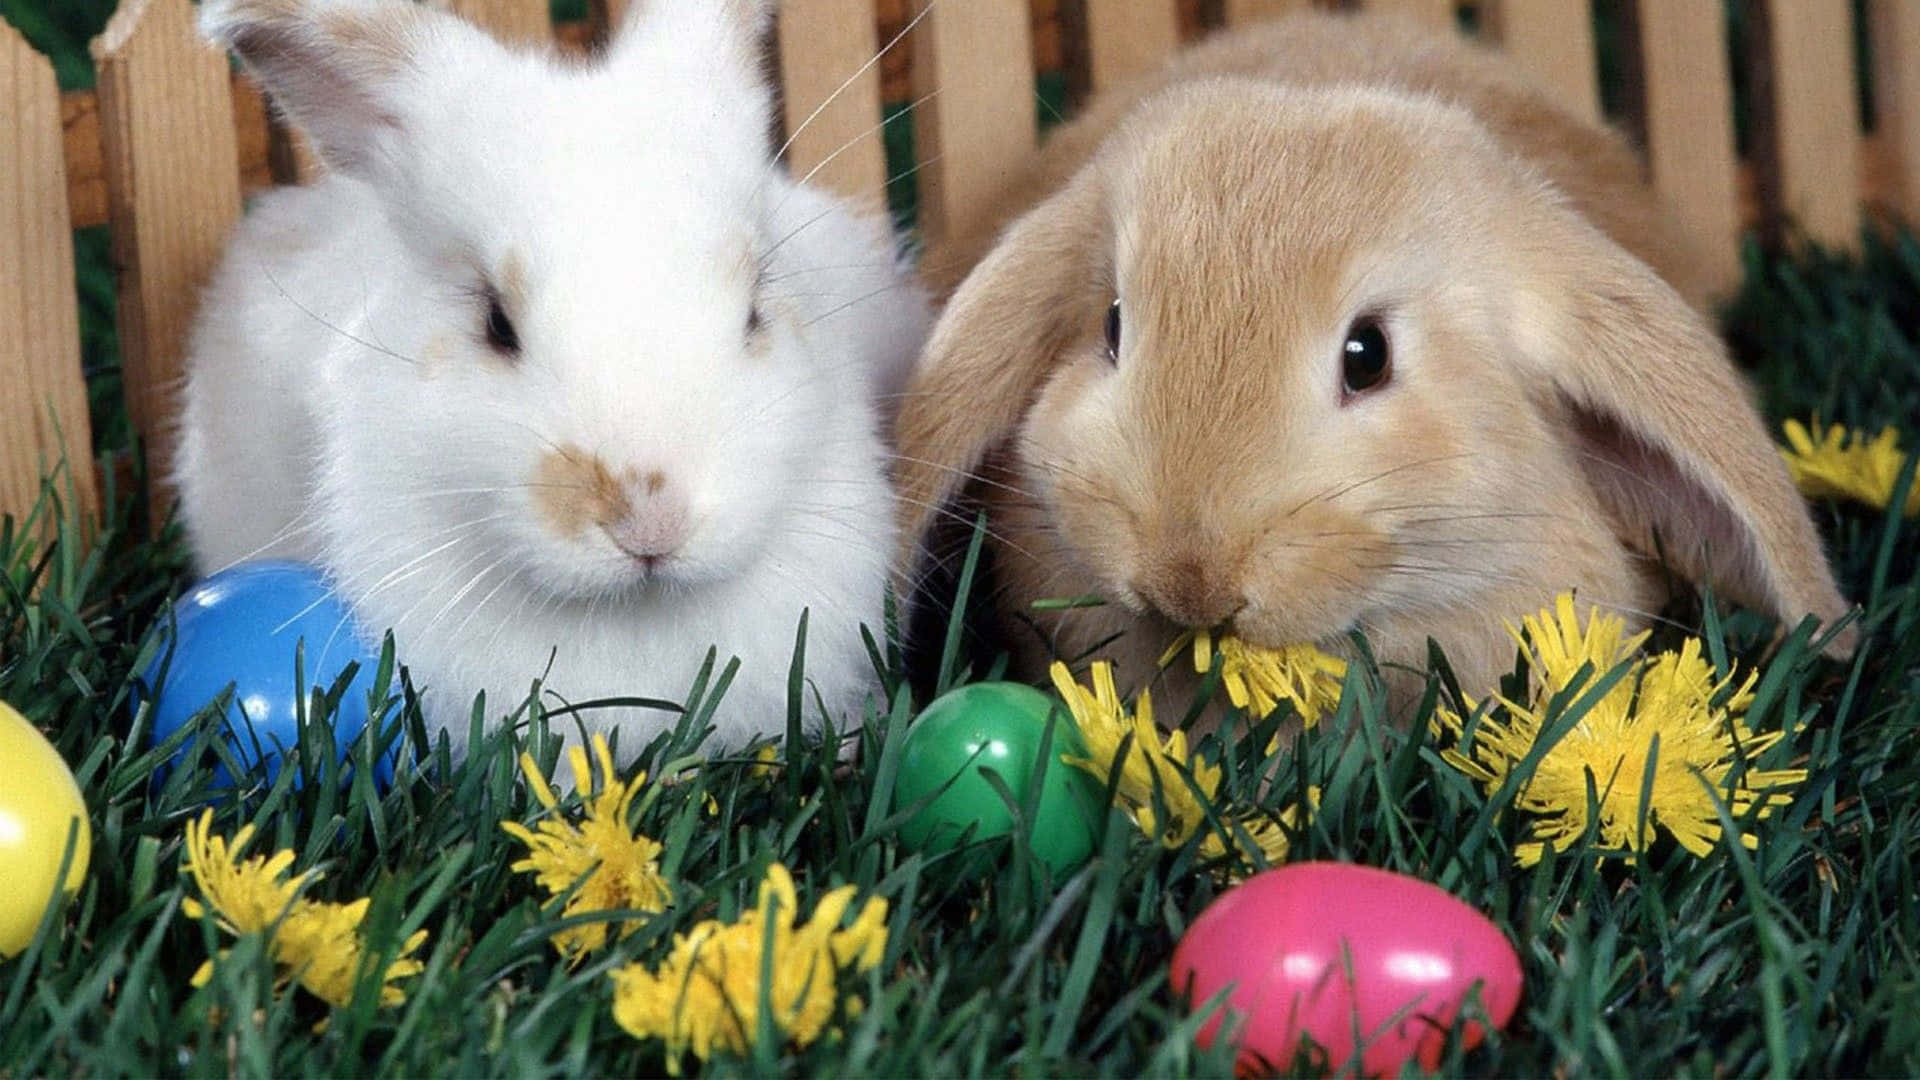 Festive Easter Bunny Amidst Colorful Eggs